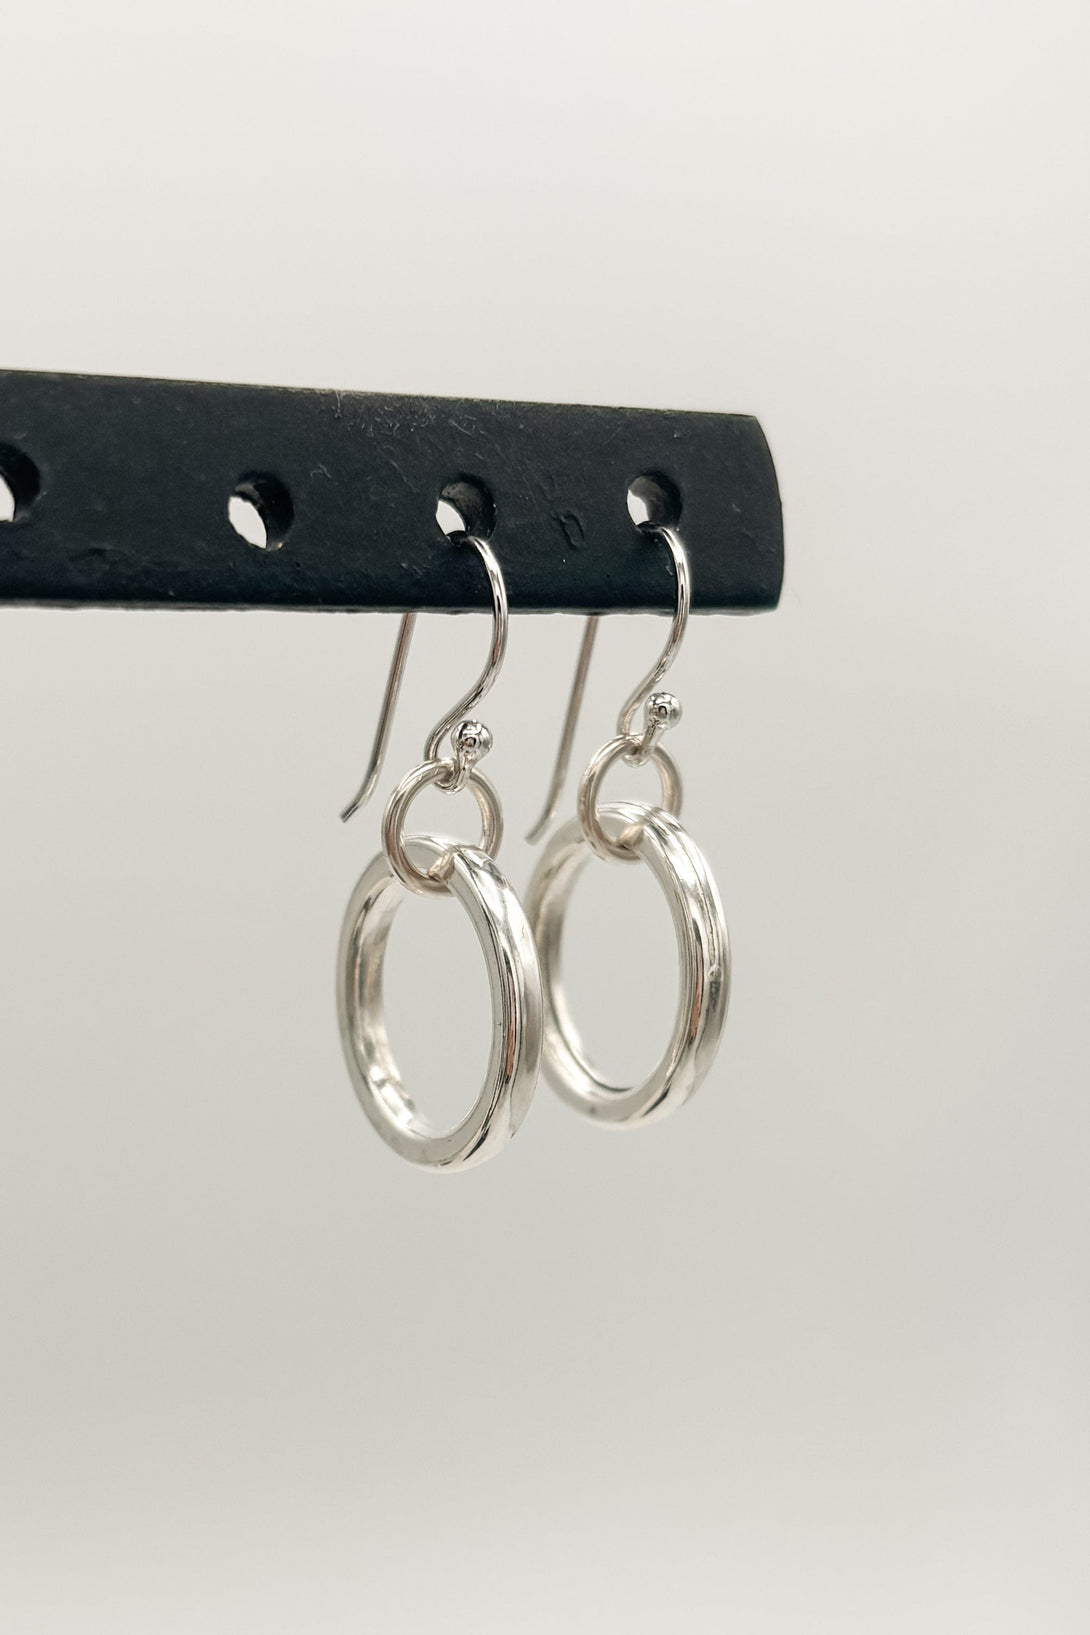 Nora Simple Silver Ring Dangle Earrings